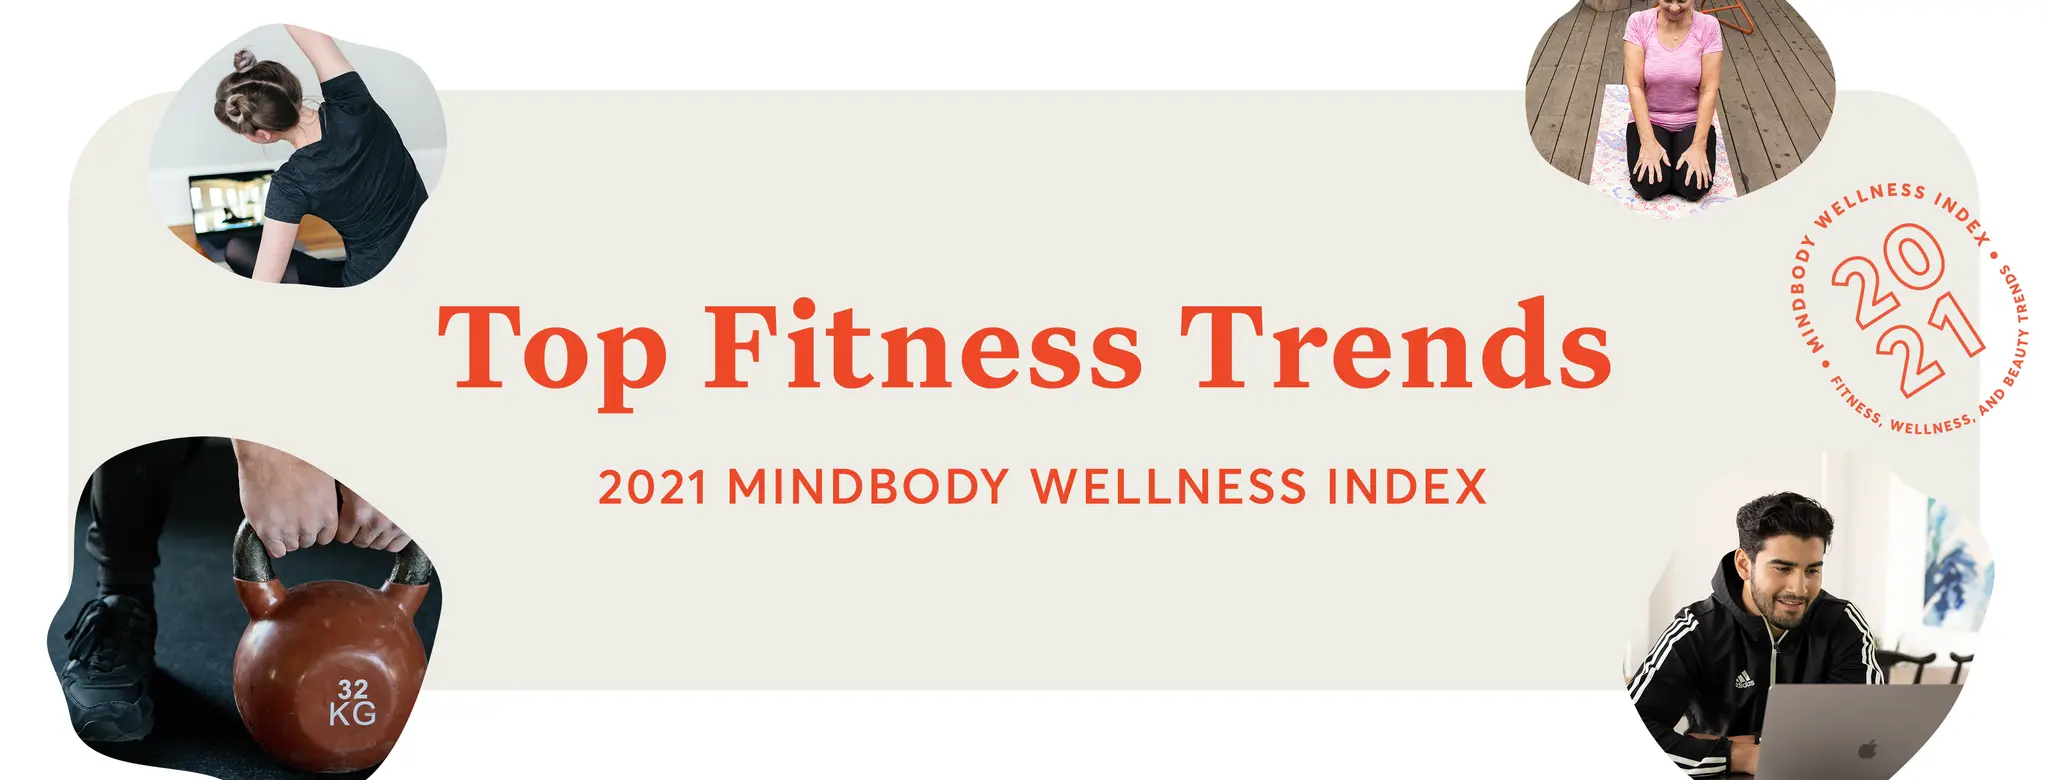 Top Fitness Trends: 2021 Mindbody Wellness Index